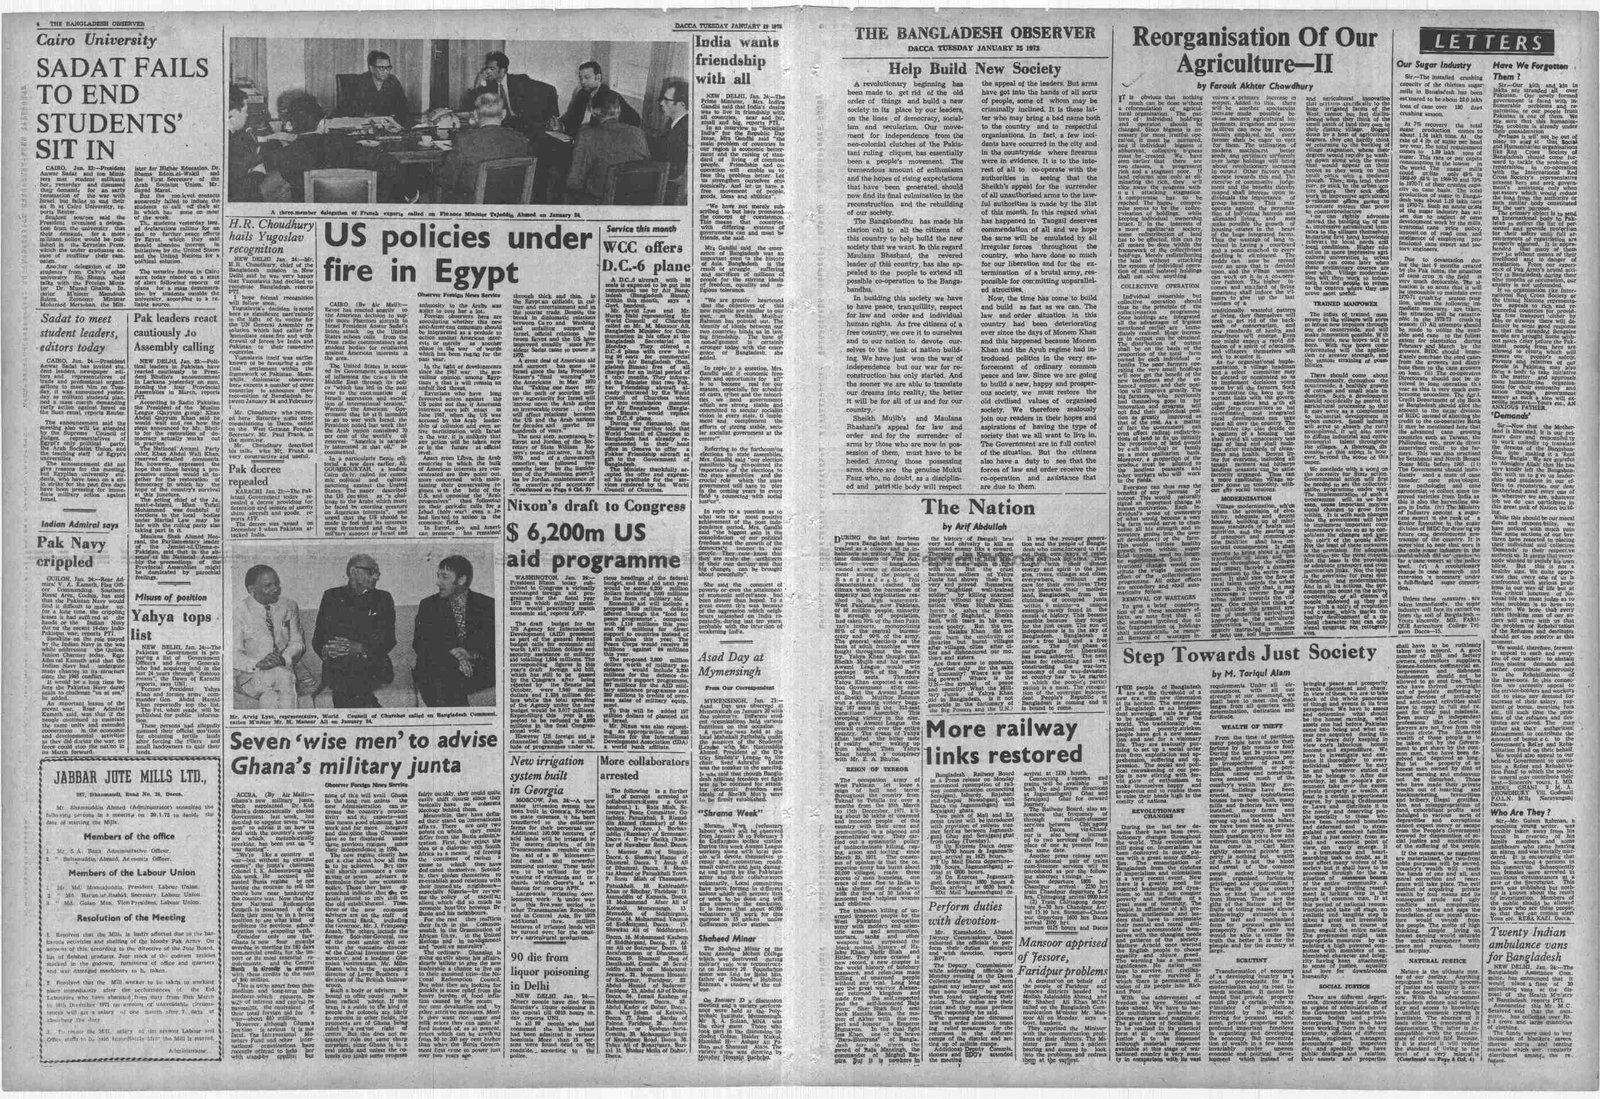 25JAN1972-Bangladesh Observer-Regular-Page 4 and 5